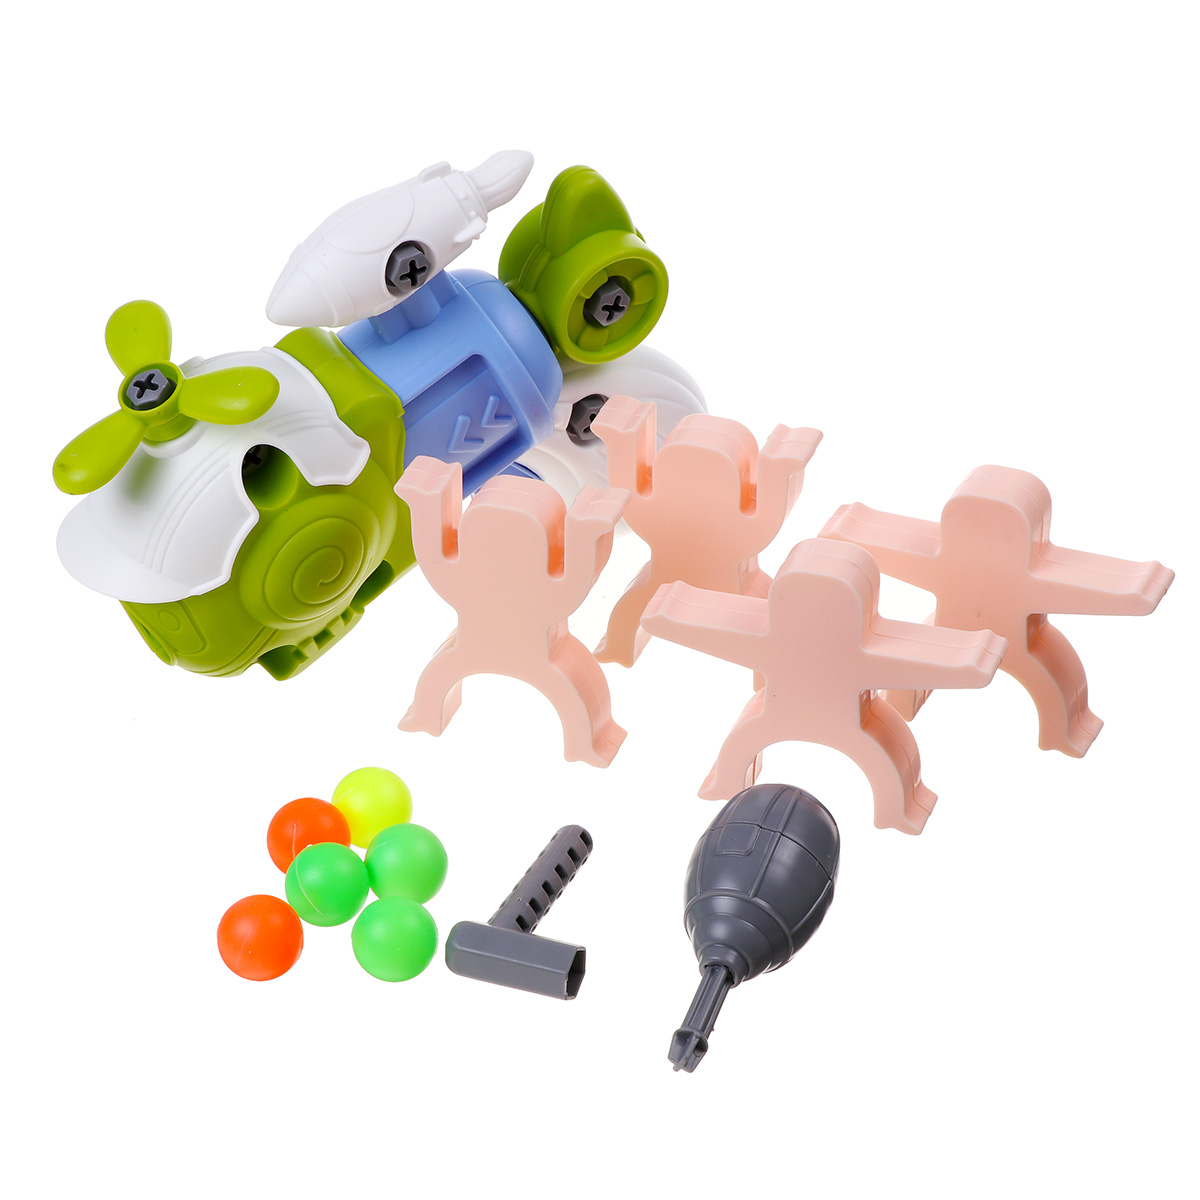 DIY-Disassembly-DinosaurAirplane-Guns-Play-Set-Model-Blocks-Assemble-Educational-Toy-for-Kids-Gift-1829732-12